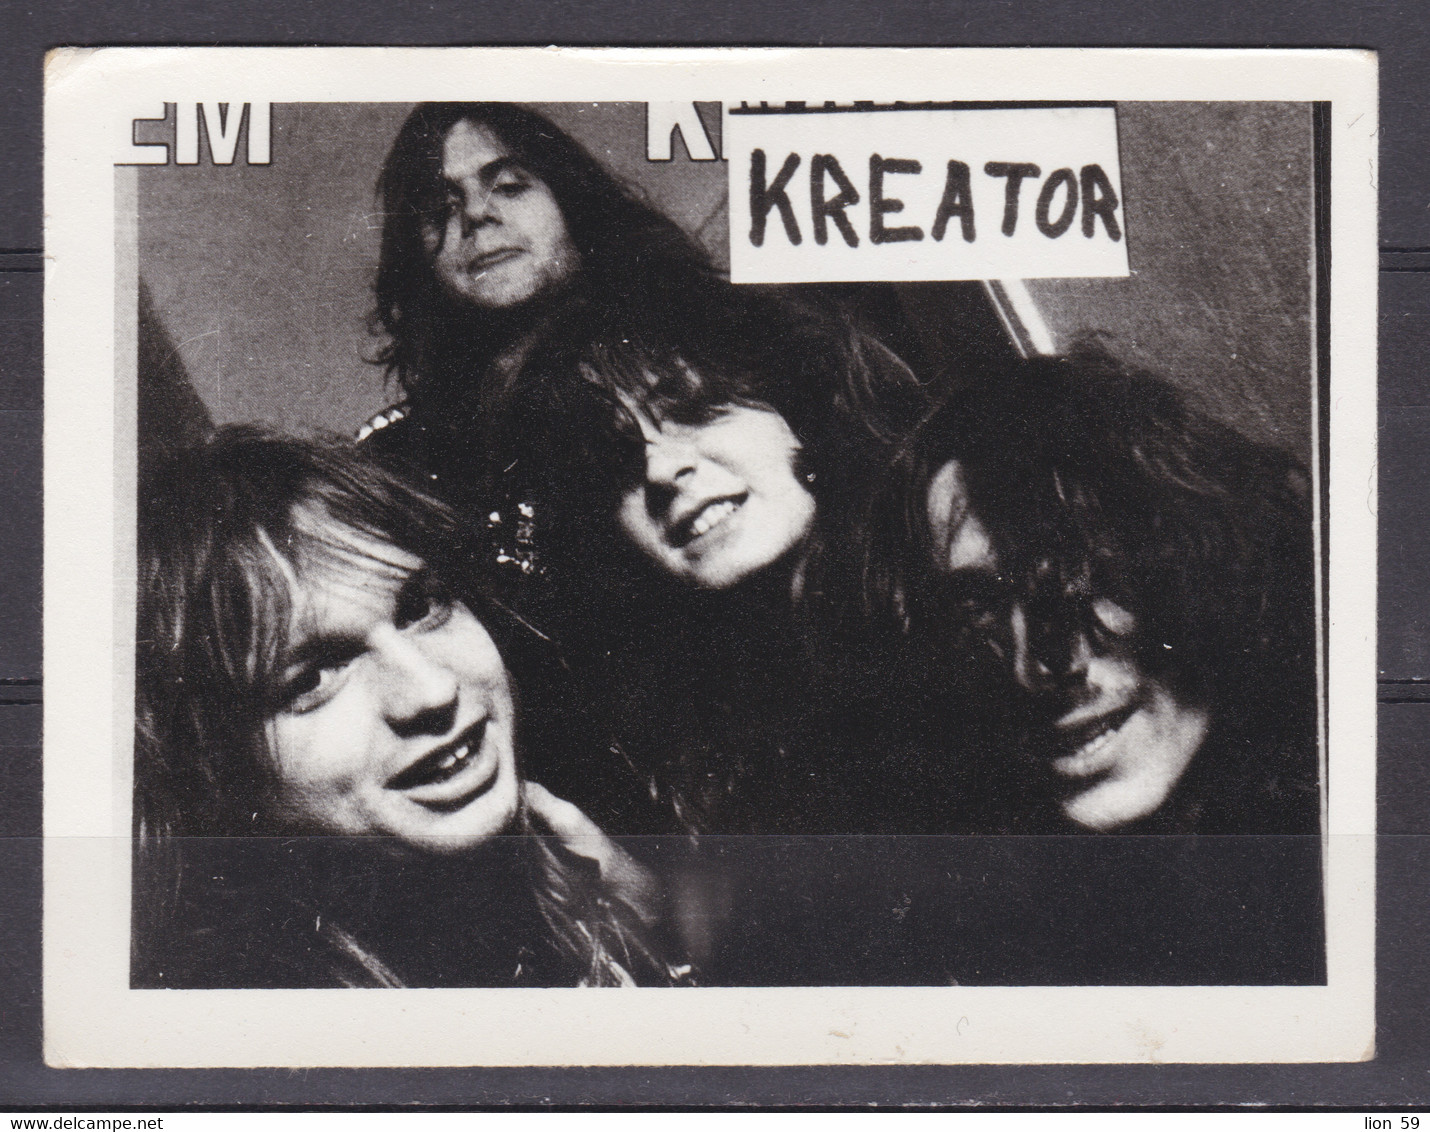 272873 / Kreator -  German Thrash Metal Band From Essen, Formed In 1982 Vocalist  Rhythm Guitarist Miland "Mille" Photo - Photographs